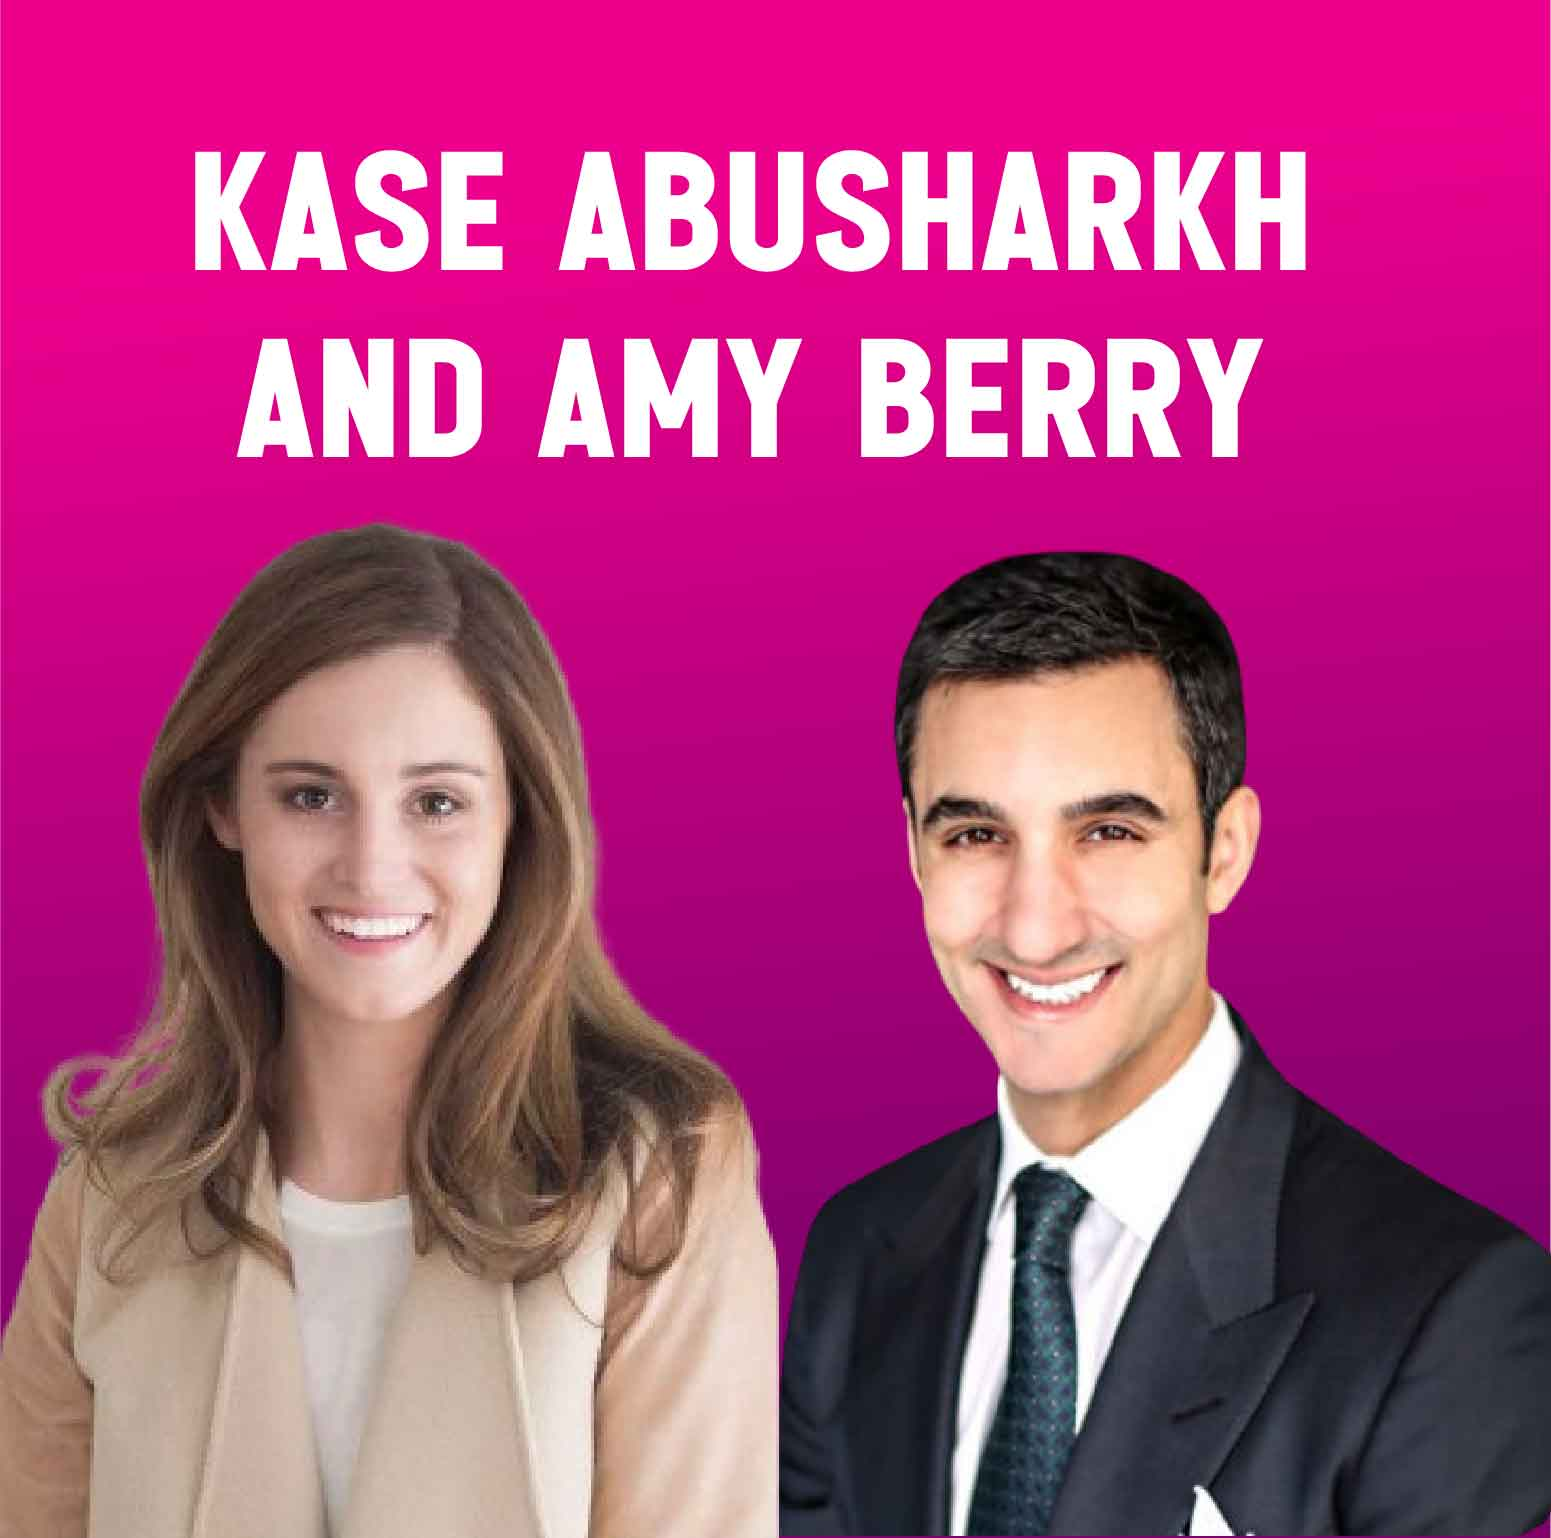 Kase Abusharkh and Amy Berry
